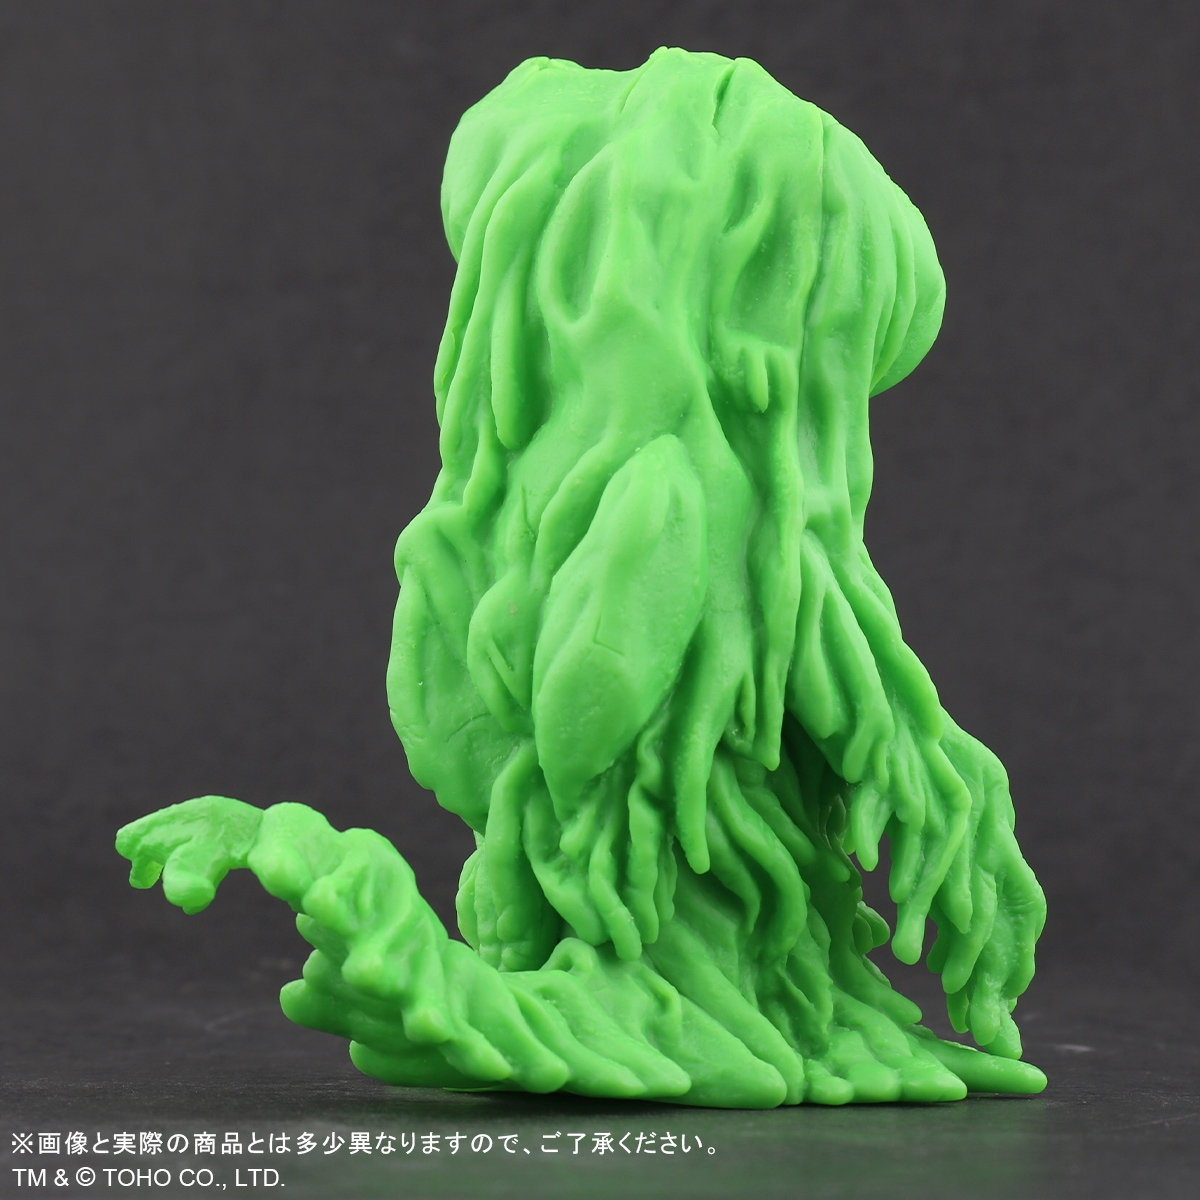 Green Hedora Hedorah Deforeal Soft Vinyl Figure Tokyo Comic Con 2019 Limited 